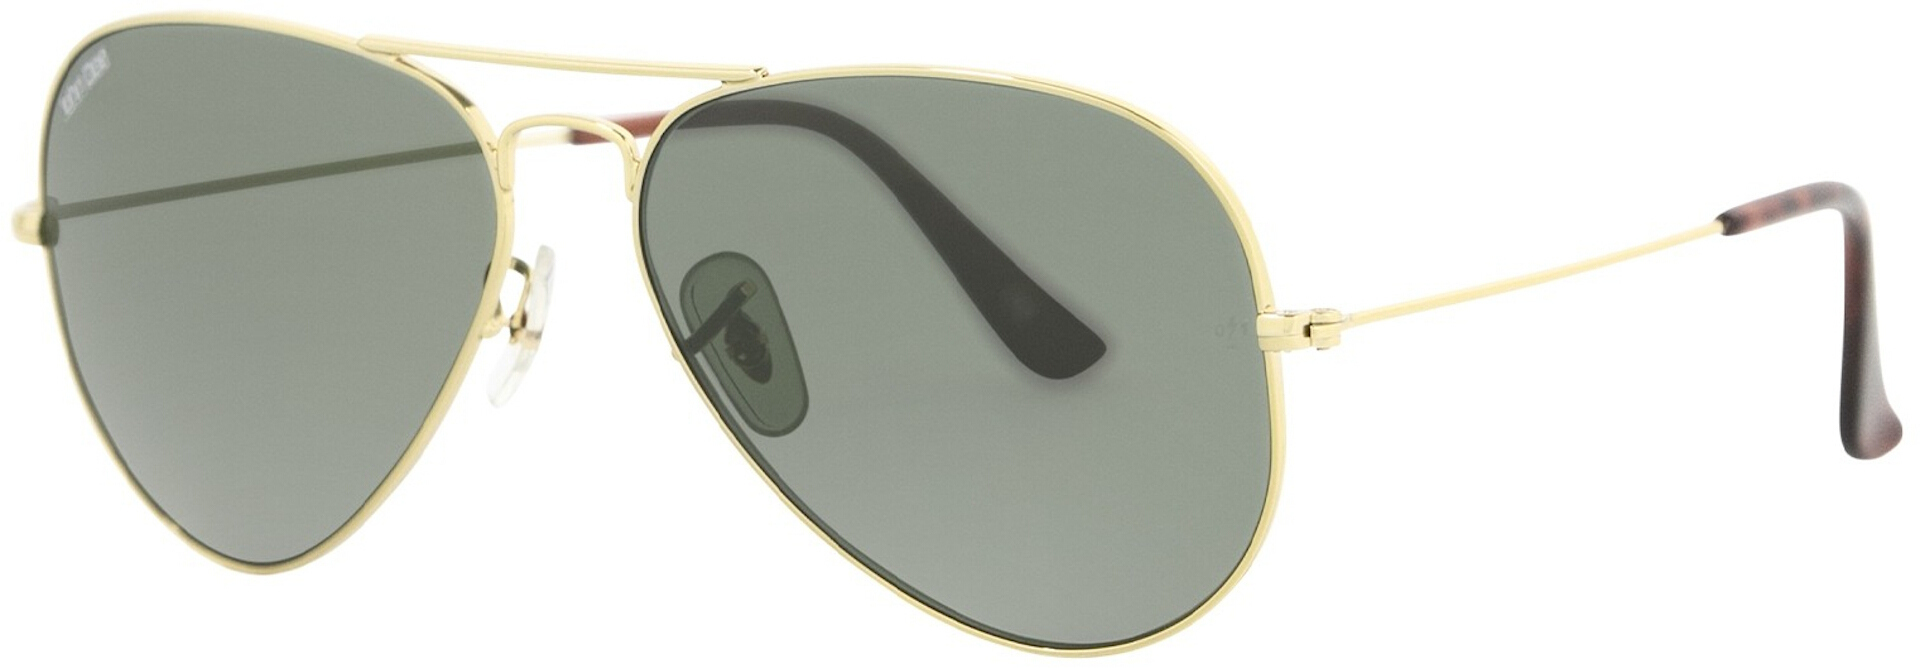 John Doe Aviator Sunglasses, gold, gold, Size One Size